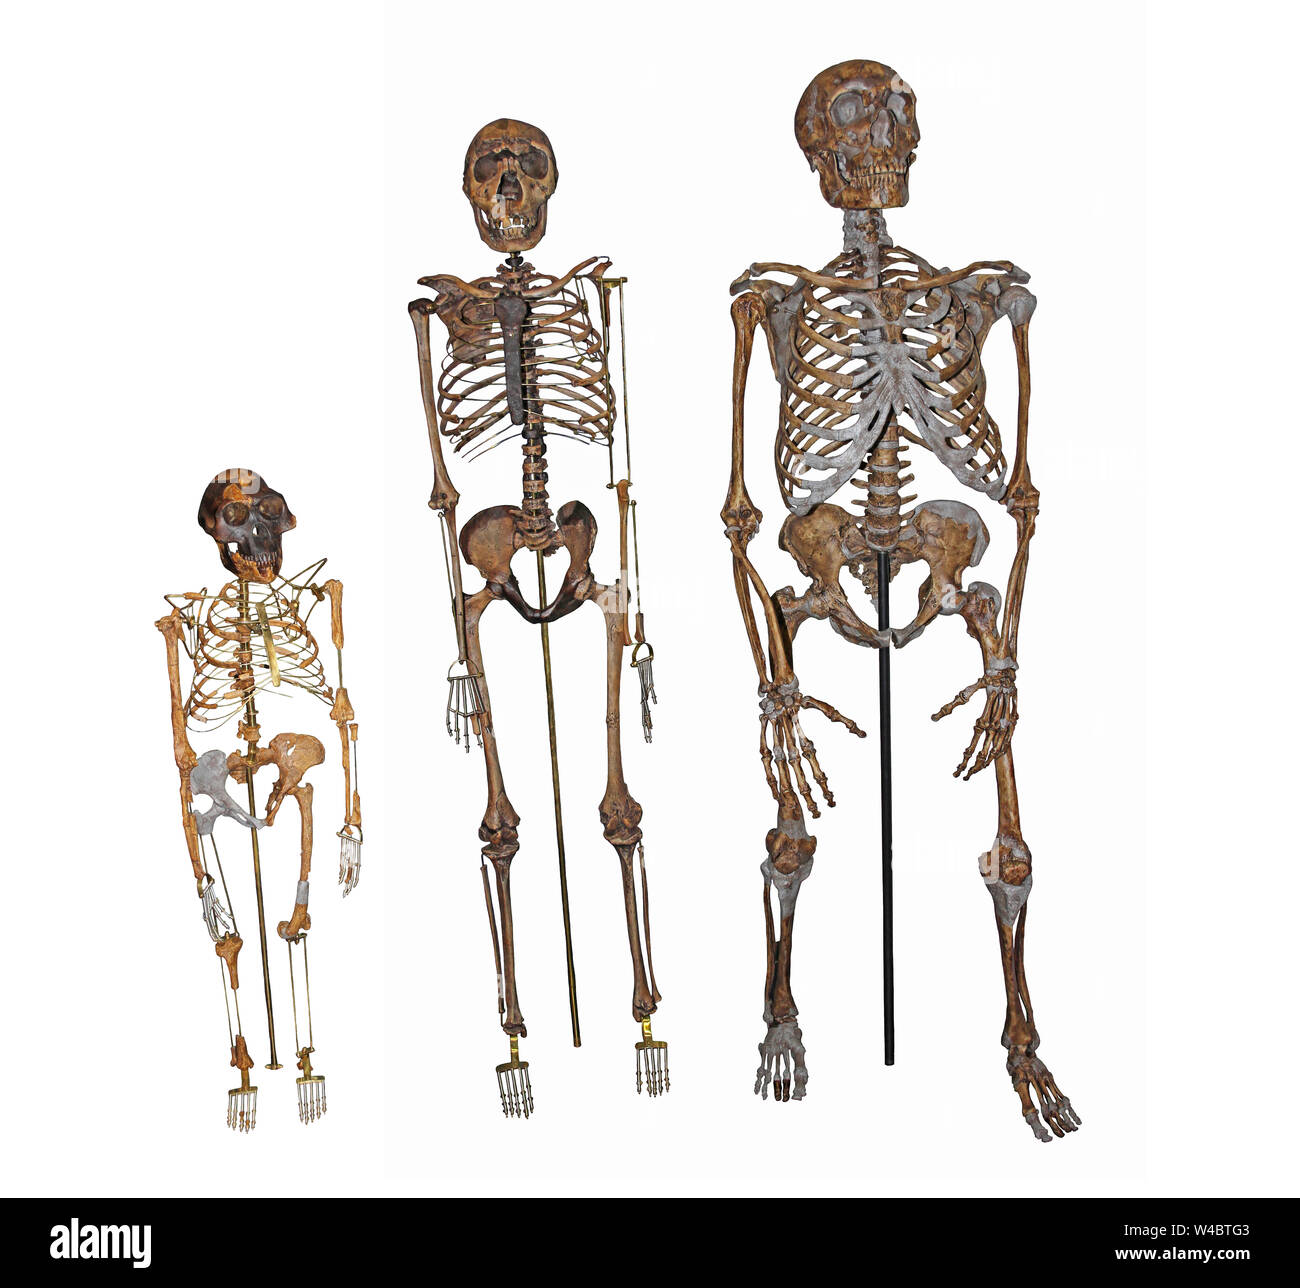 Evoluzione umana - Confronto di scheletri di " Lucia' Australopithecus afarensis, 'Nariokotome Boy' Homo ergaster e uomo di Neanderthal Foto Stock